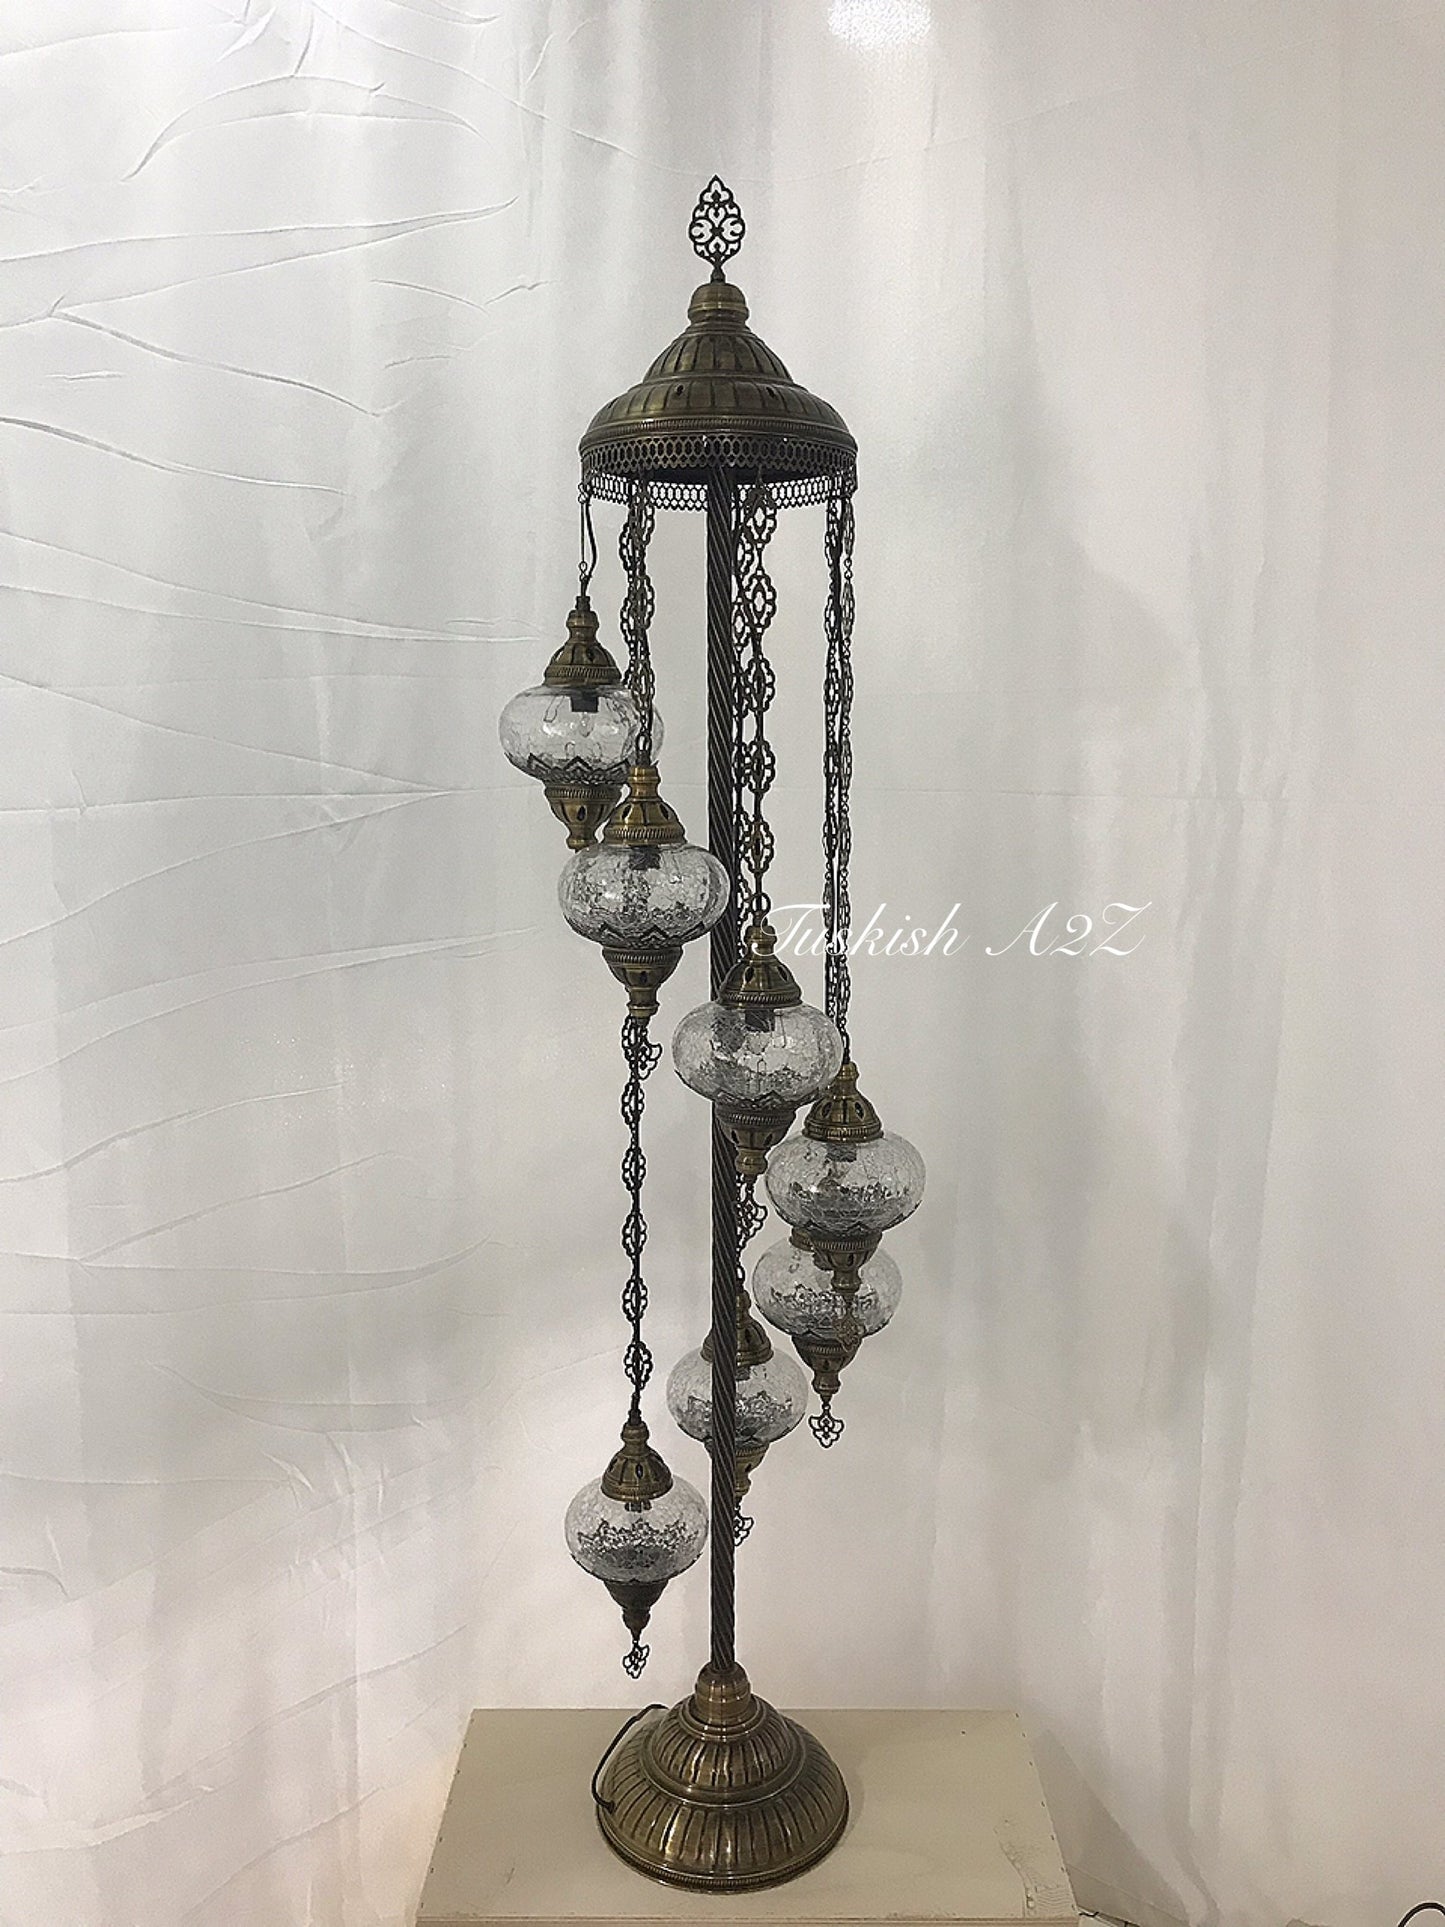 Ottoman TURKISH MOSAIC FLOOR LAMP with 7 Cracked GLOBES,ID:151